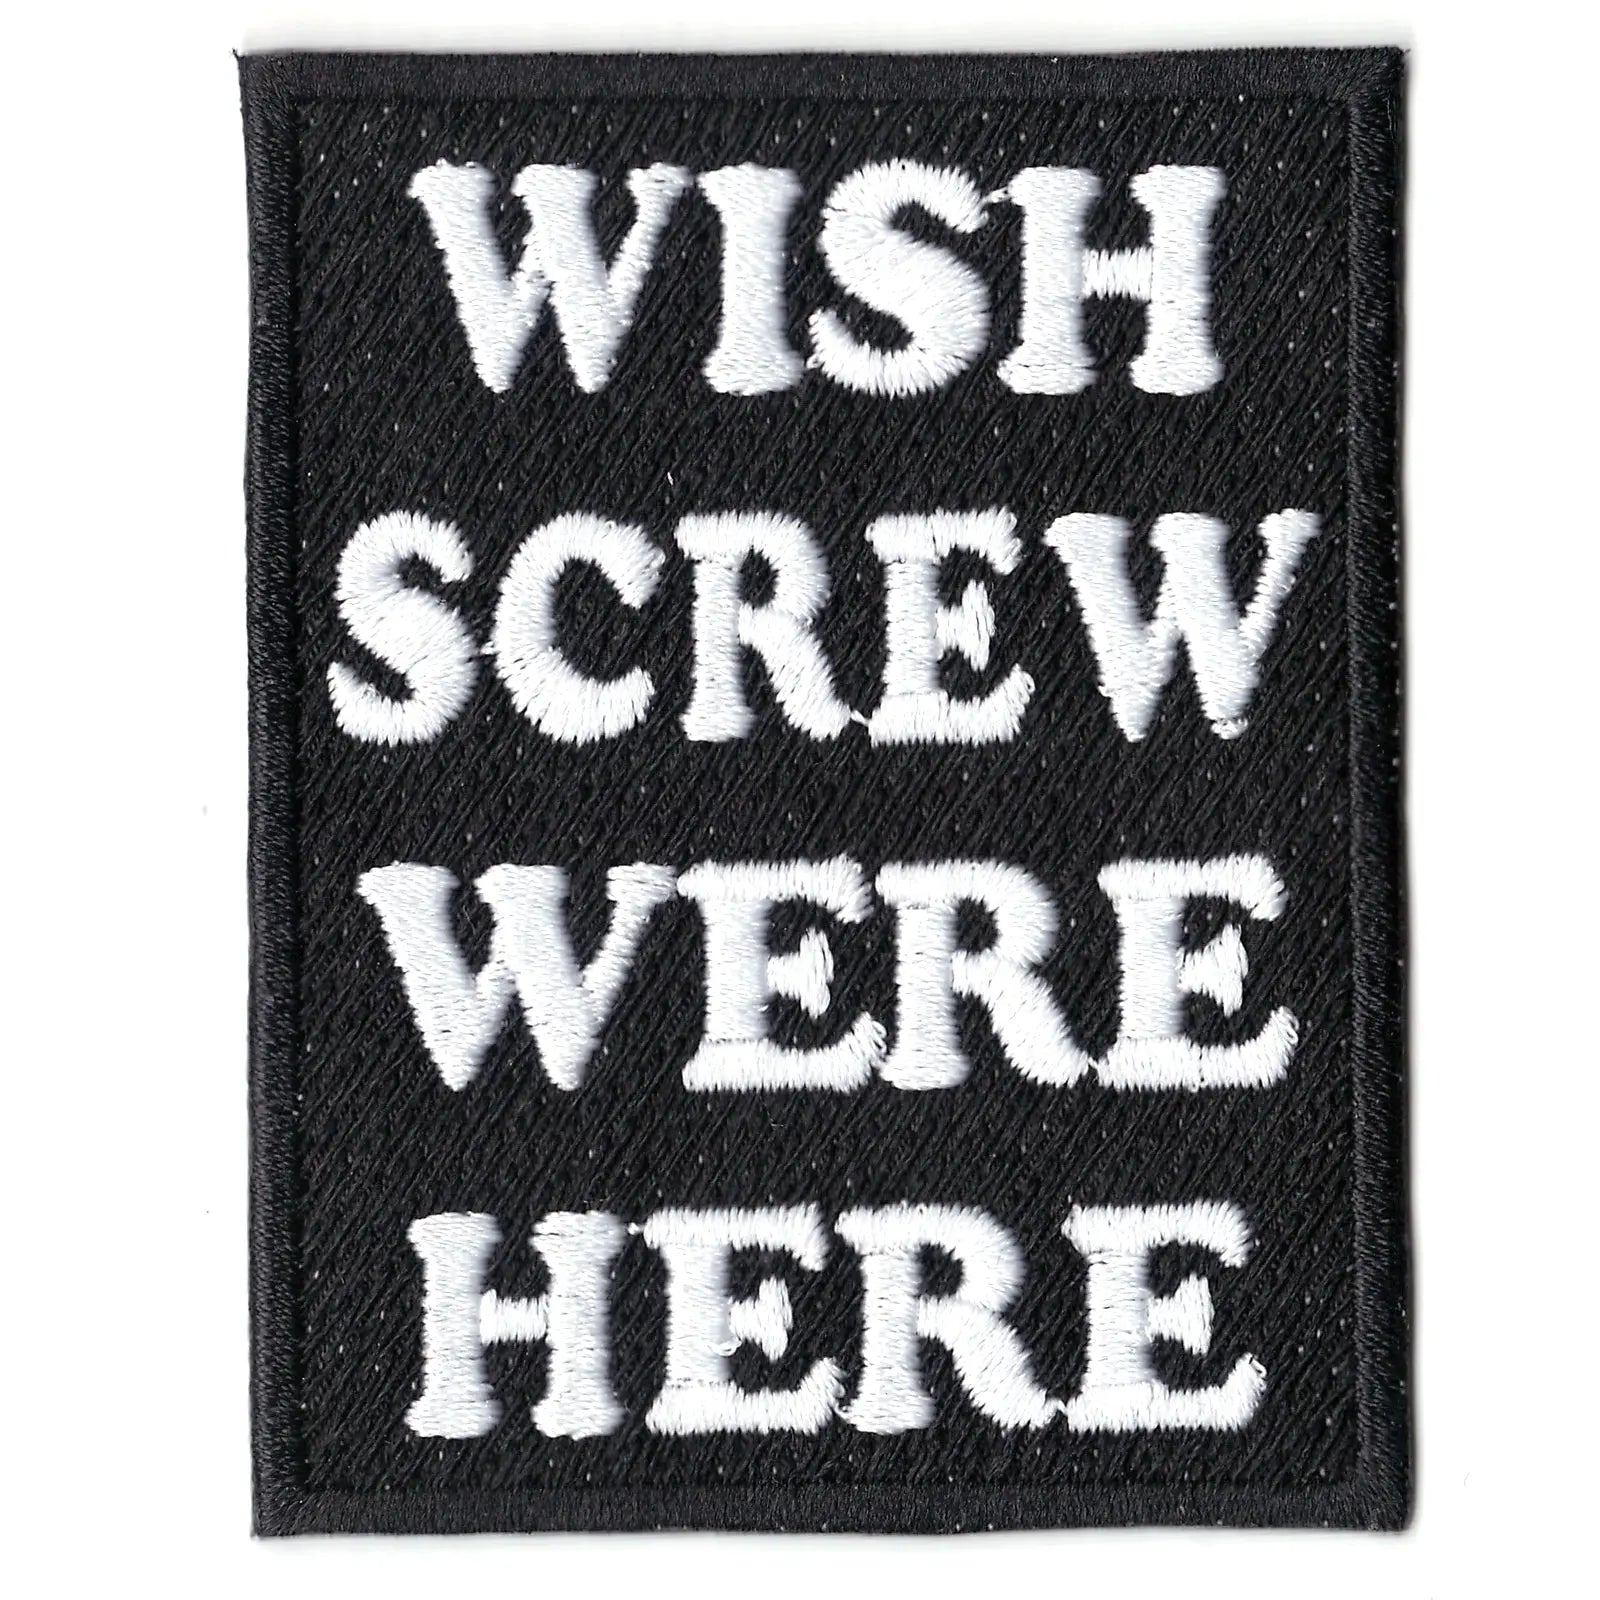 Wish Screw Were Here Box Logo Iron On Patch 